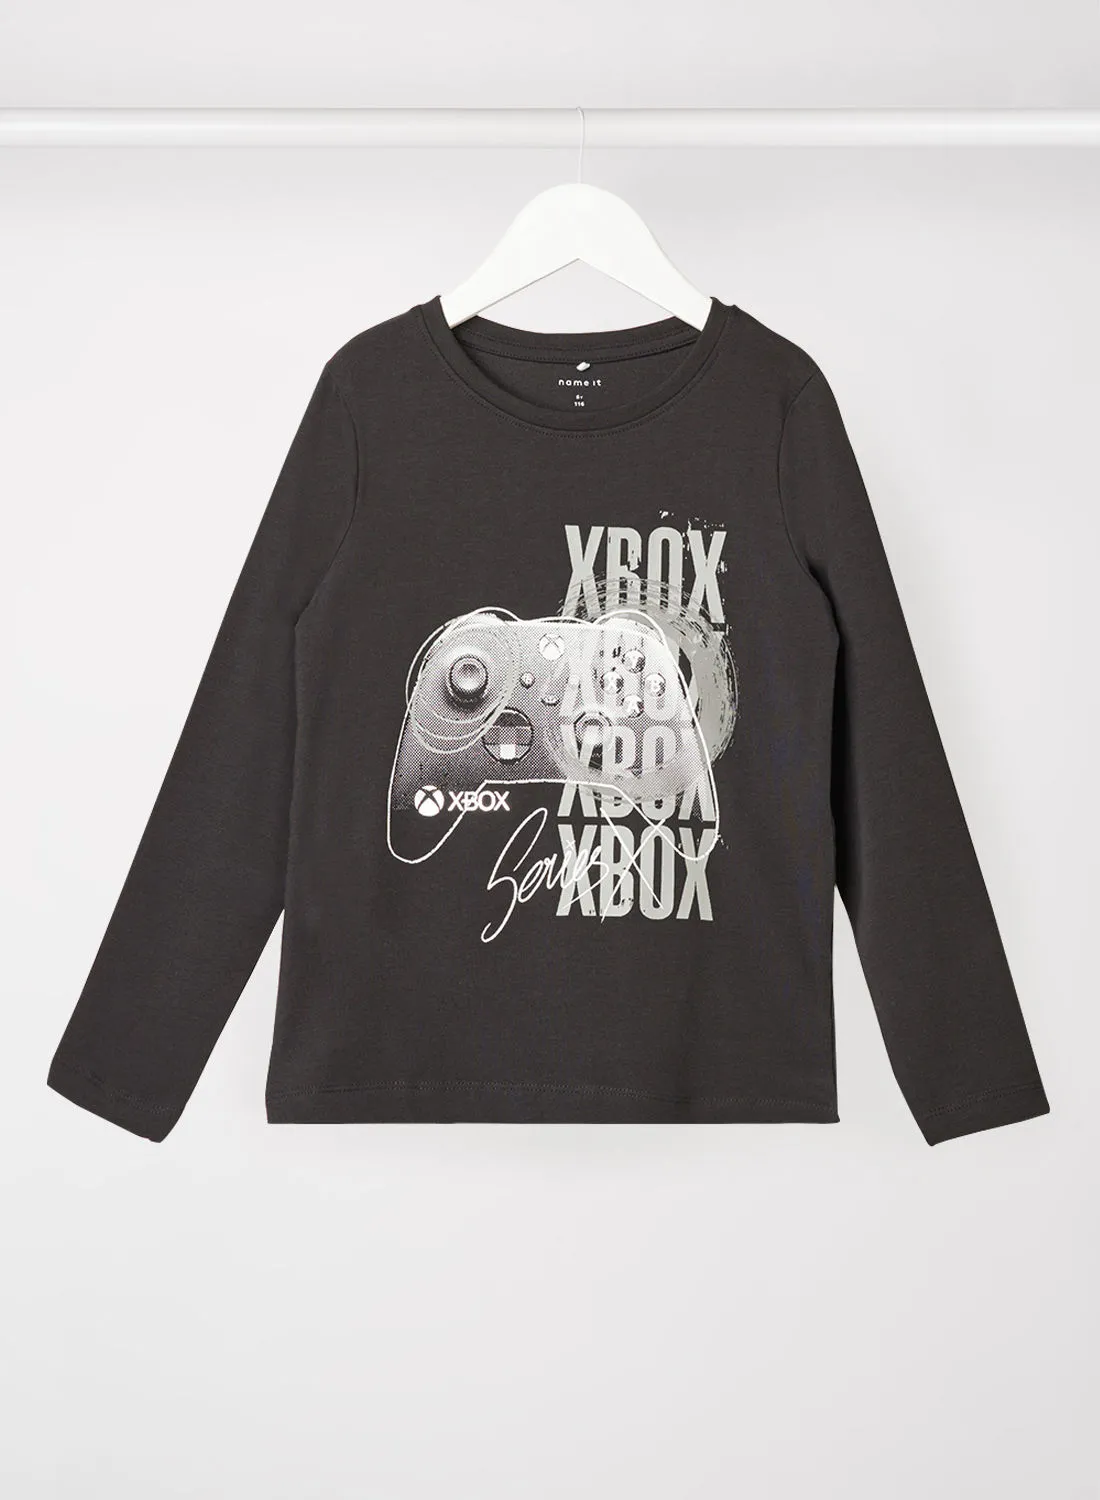 NAME IT Kids/Teen Xbox Graphic T-Shirt Black